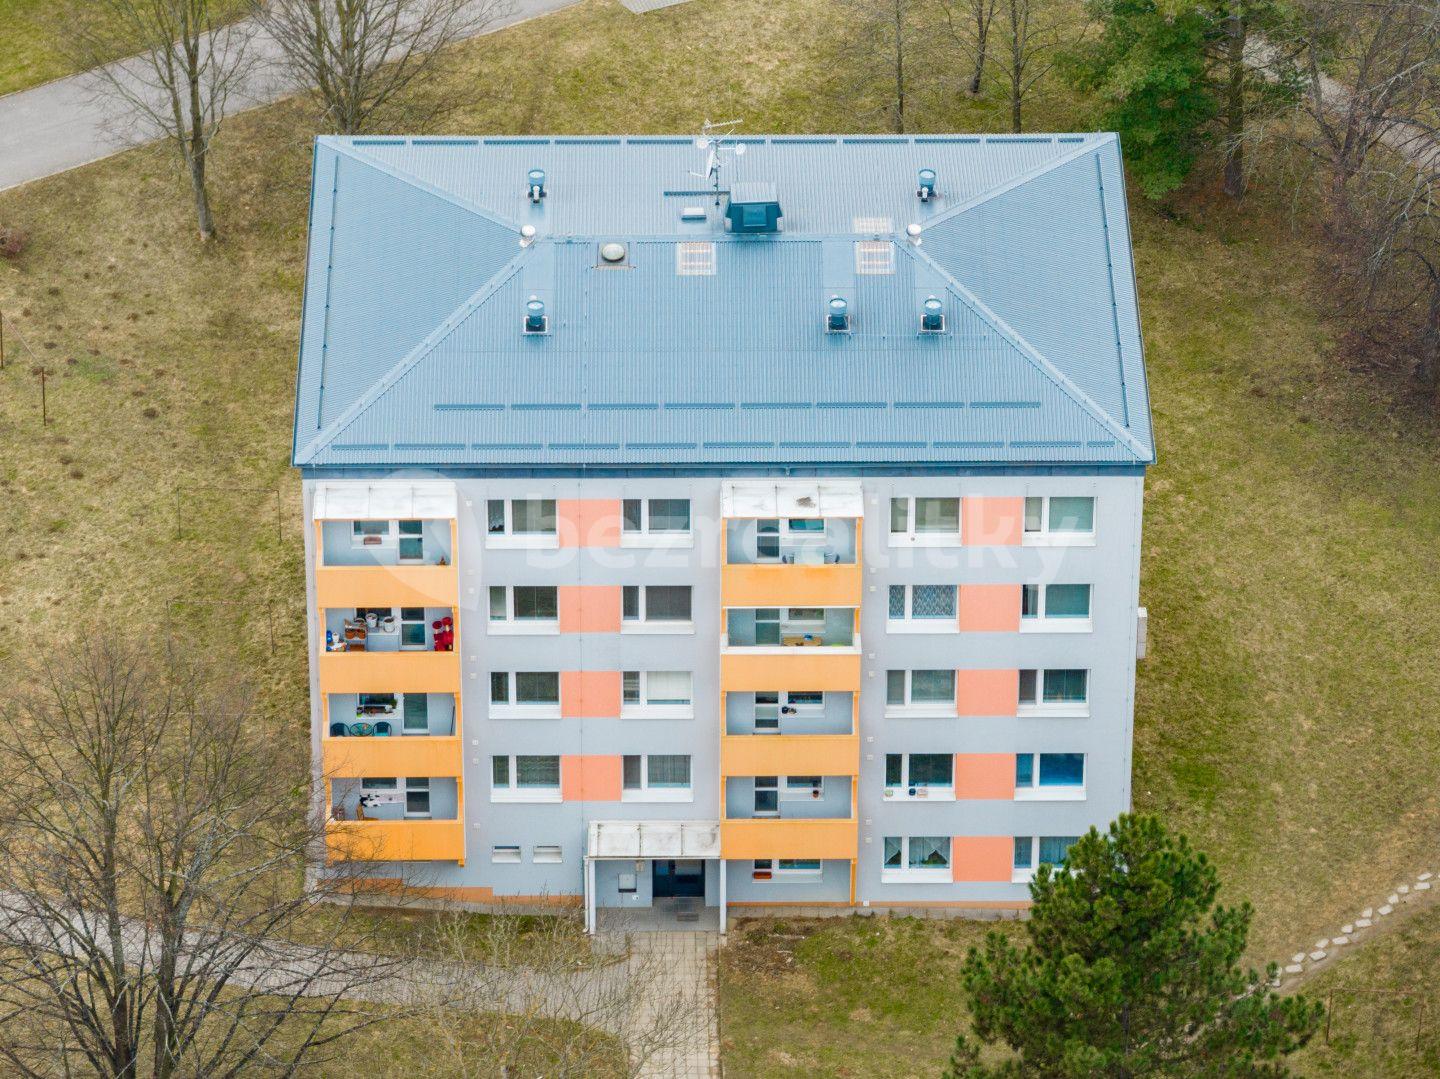 3 bedroom flat for sale, 71 m², Březinova, Jihlava, Vysočina Region